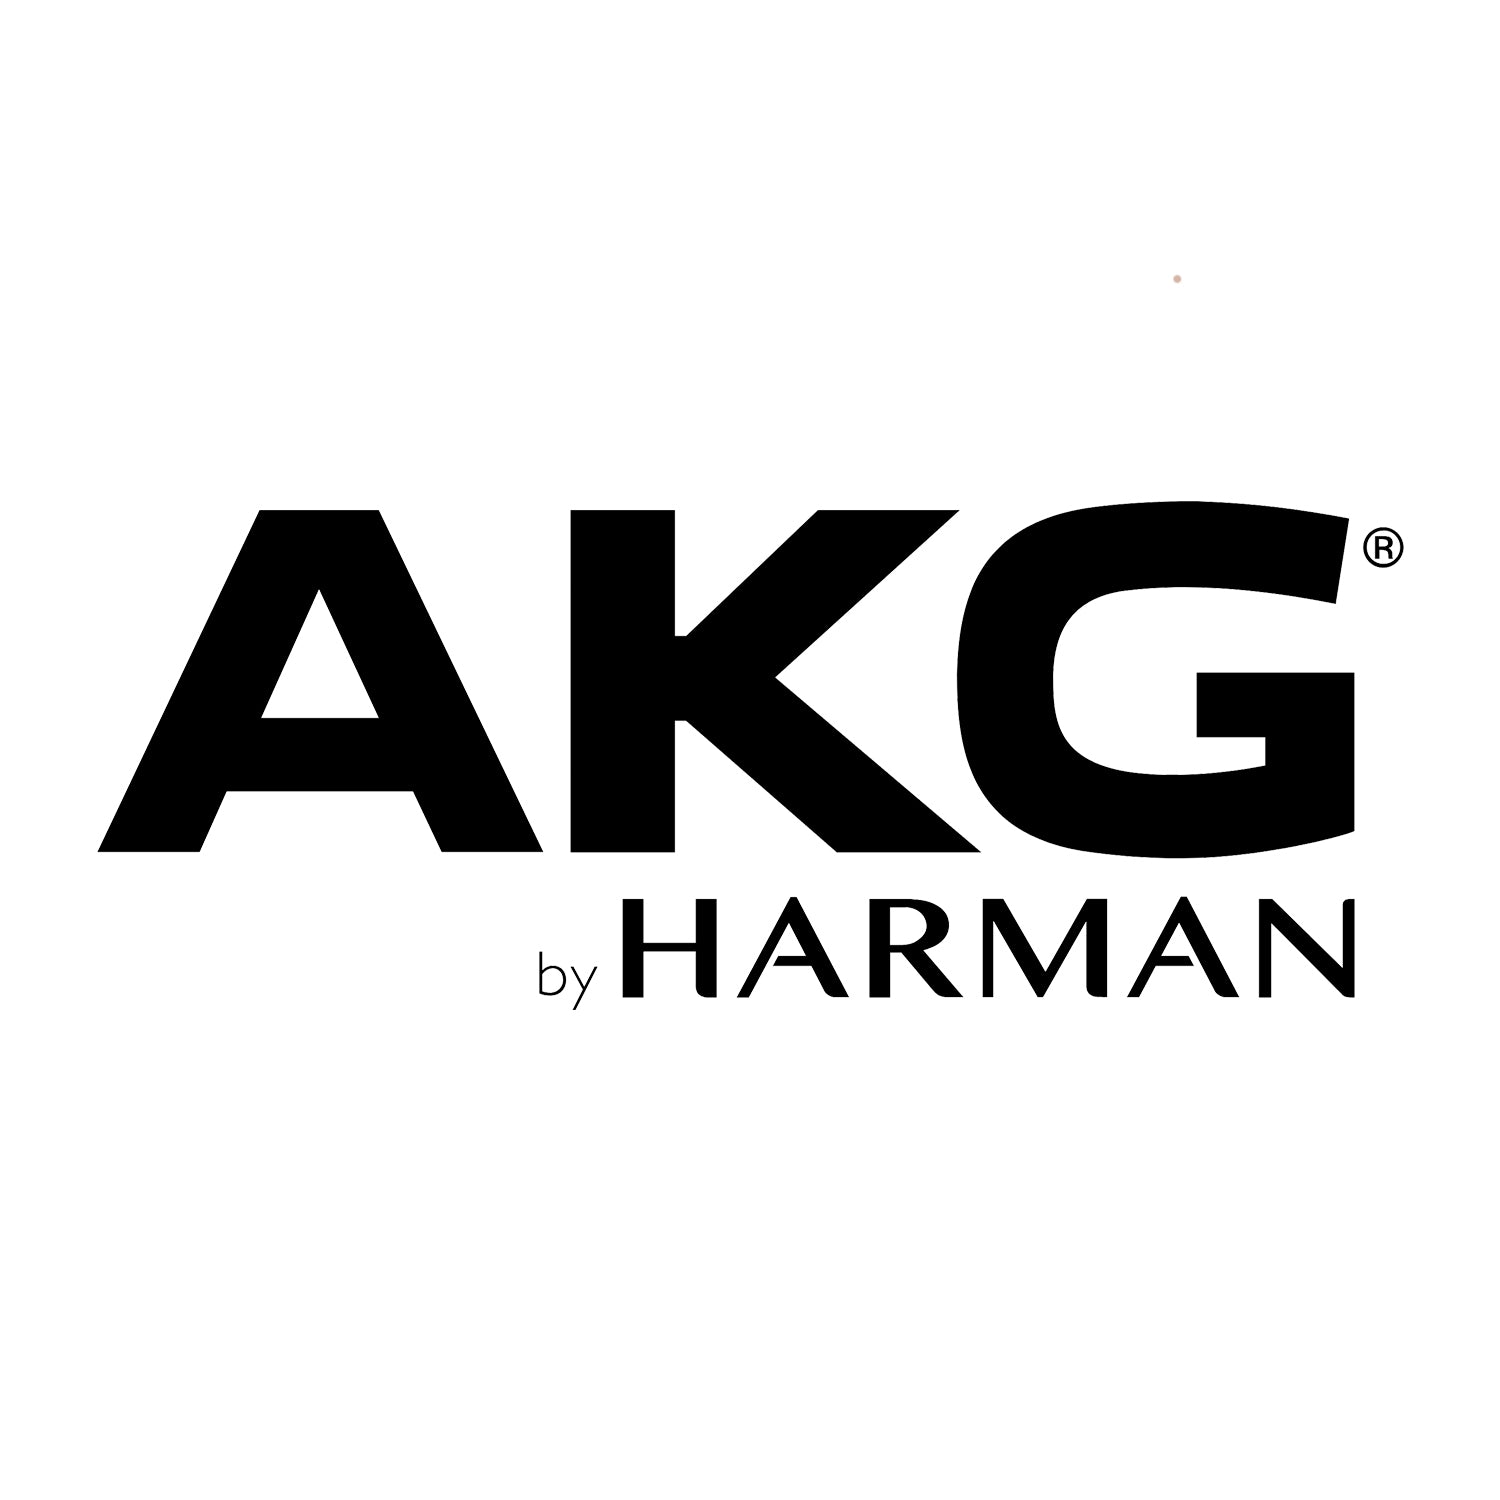 AKG K52 Professional Closed-back Headphones (AKG K 52) l Mavpro Malaysia